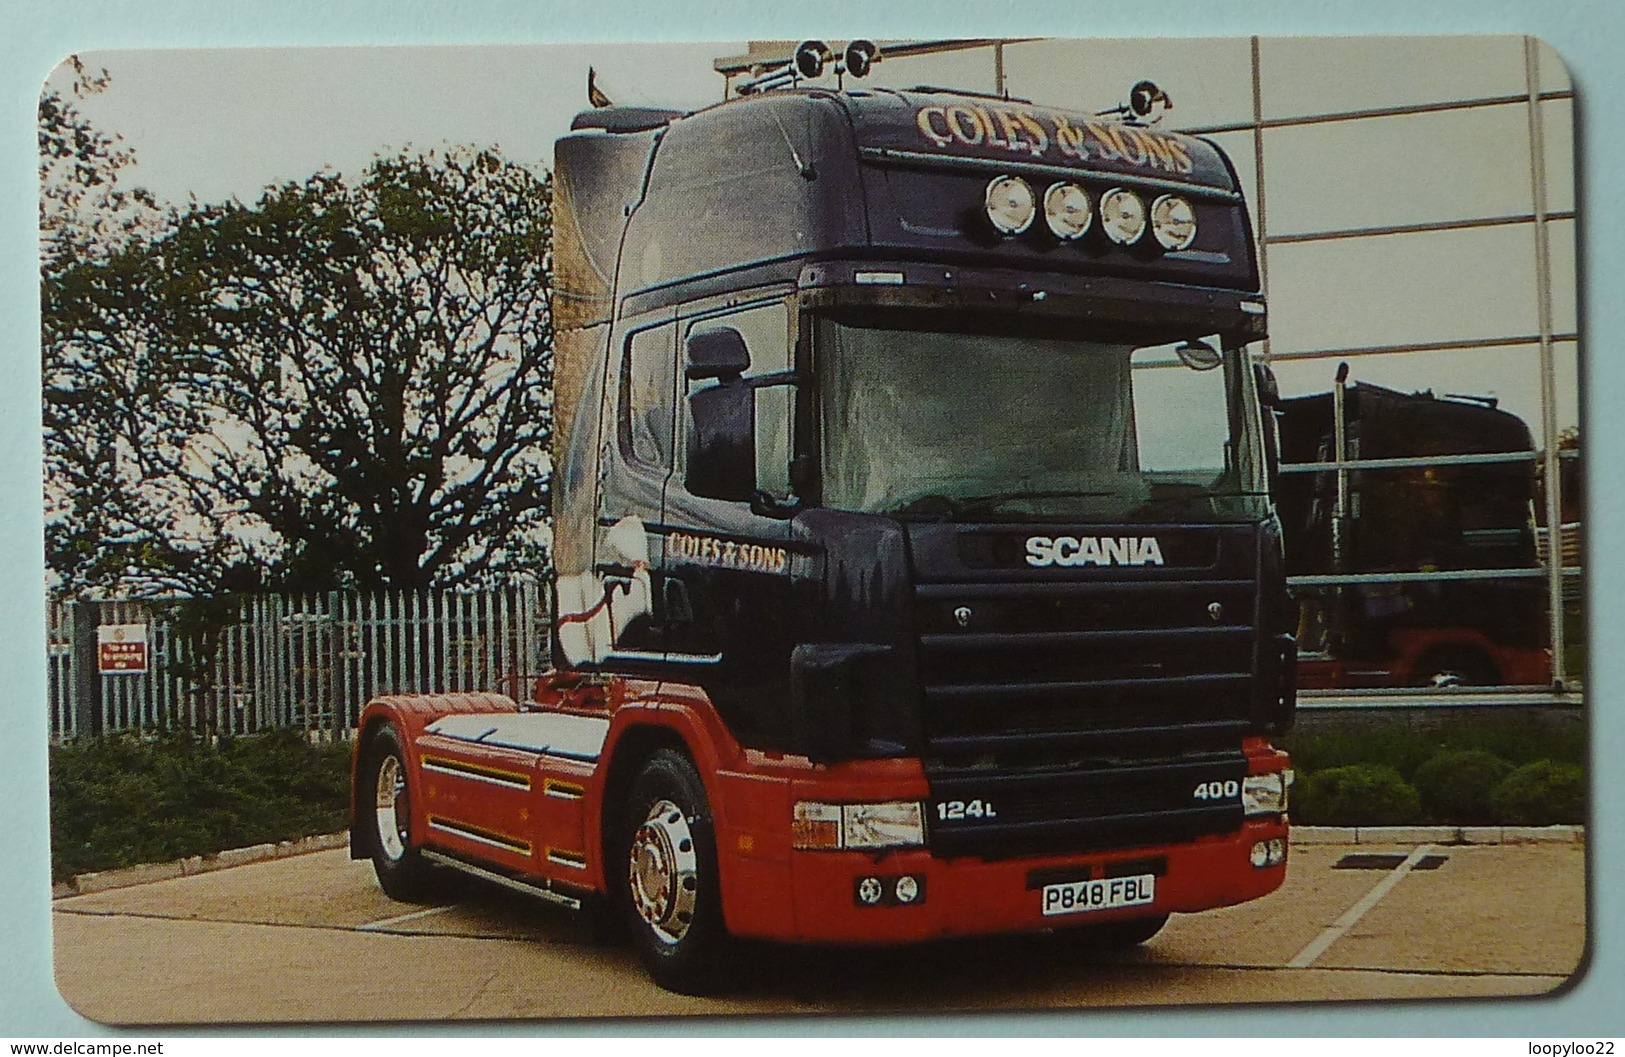 United Kingdom - BT - Chip - PRO261 - Super Trucks No 1 - Coles & Sons - 1000ex - Mint - BT Werbezwecke